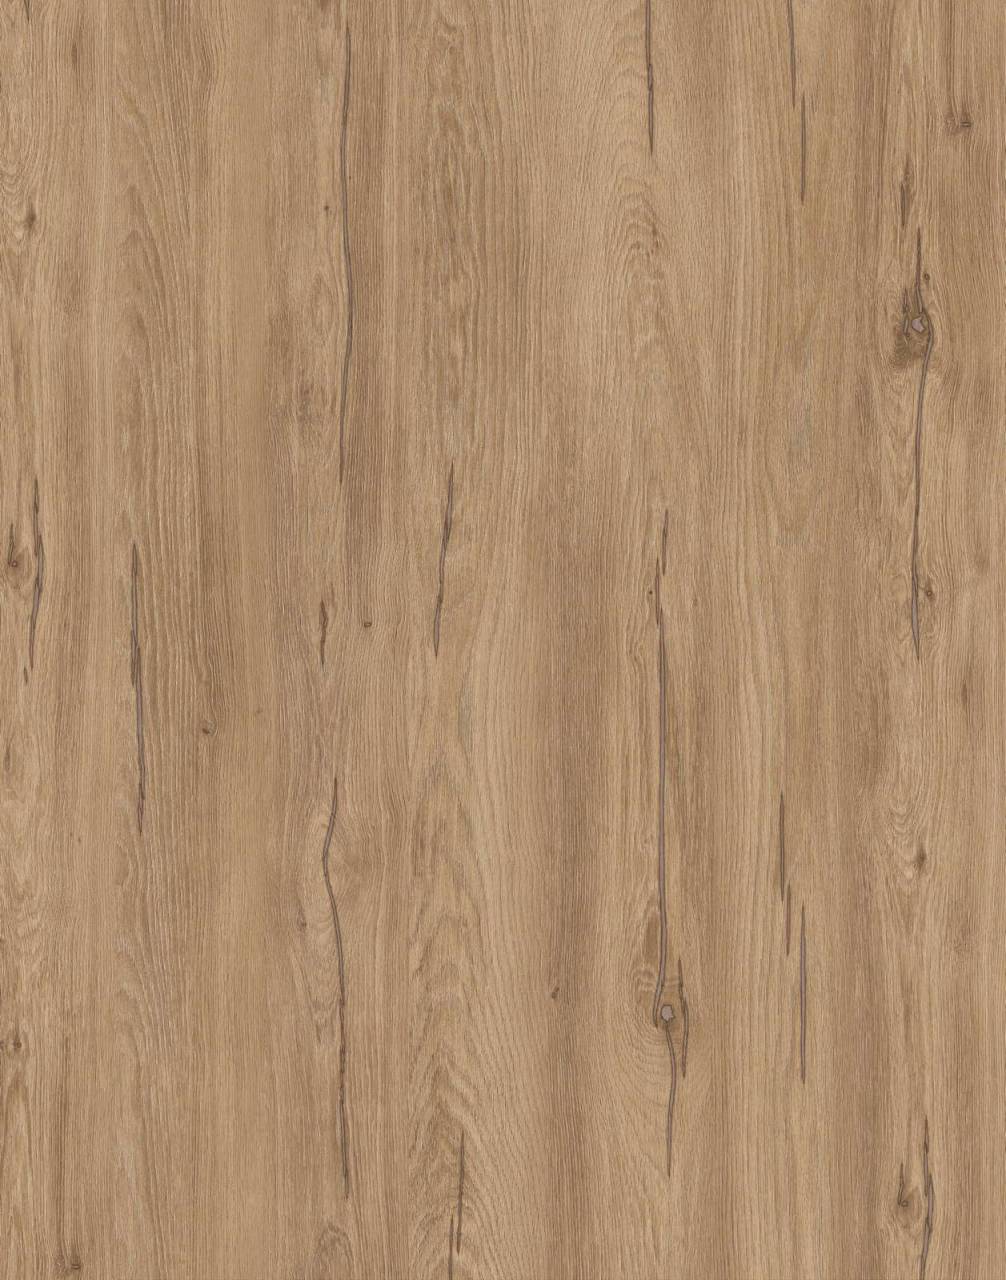 This is a Hazel Silverjack Oak laminate worktop sample, K544 RW, with a textured, brown wood-like design.